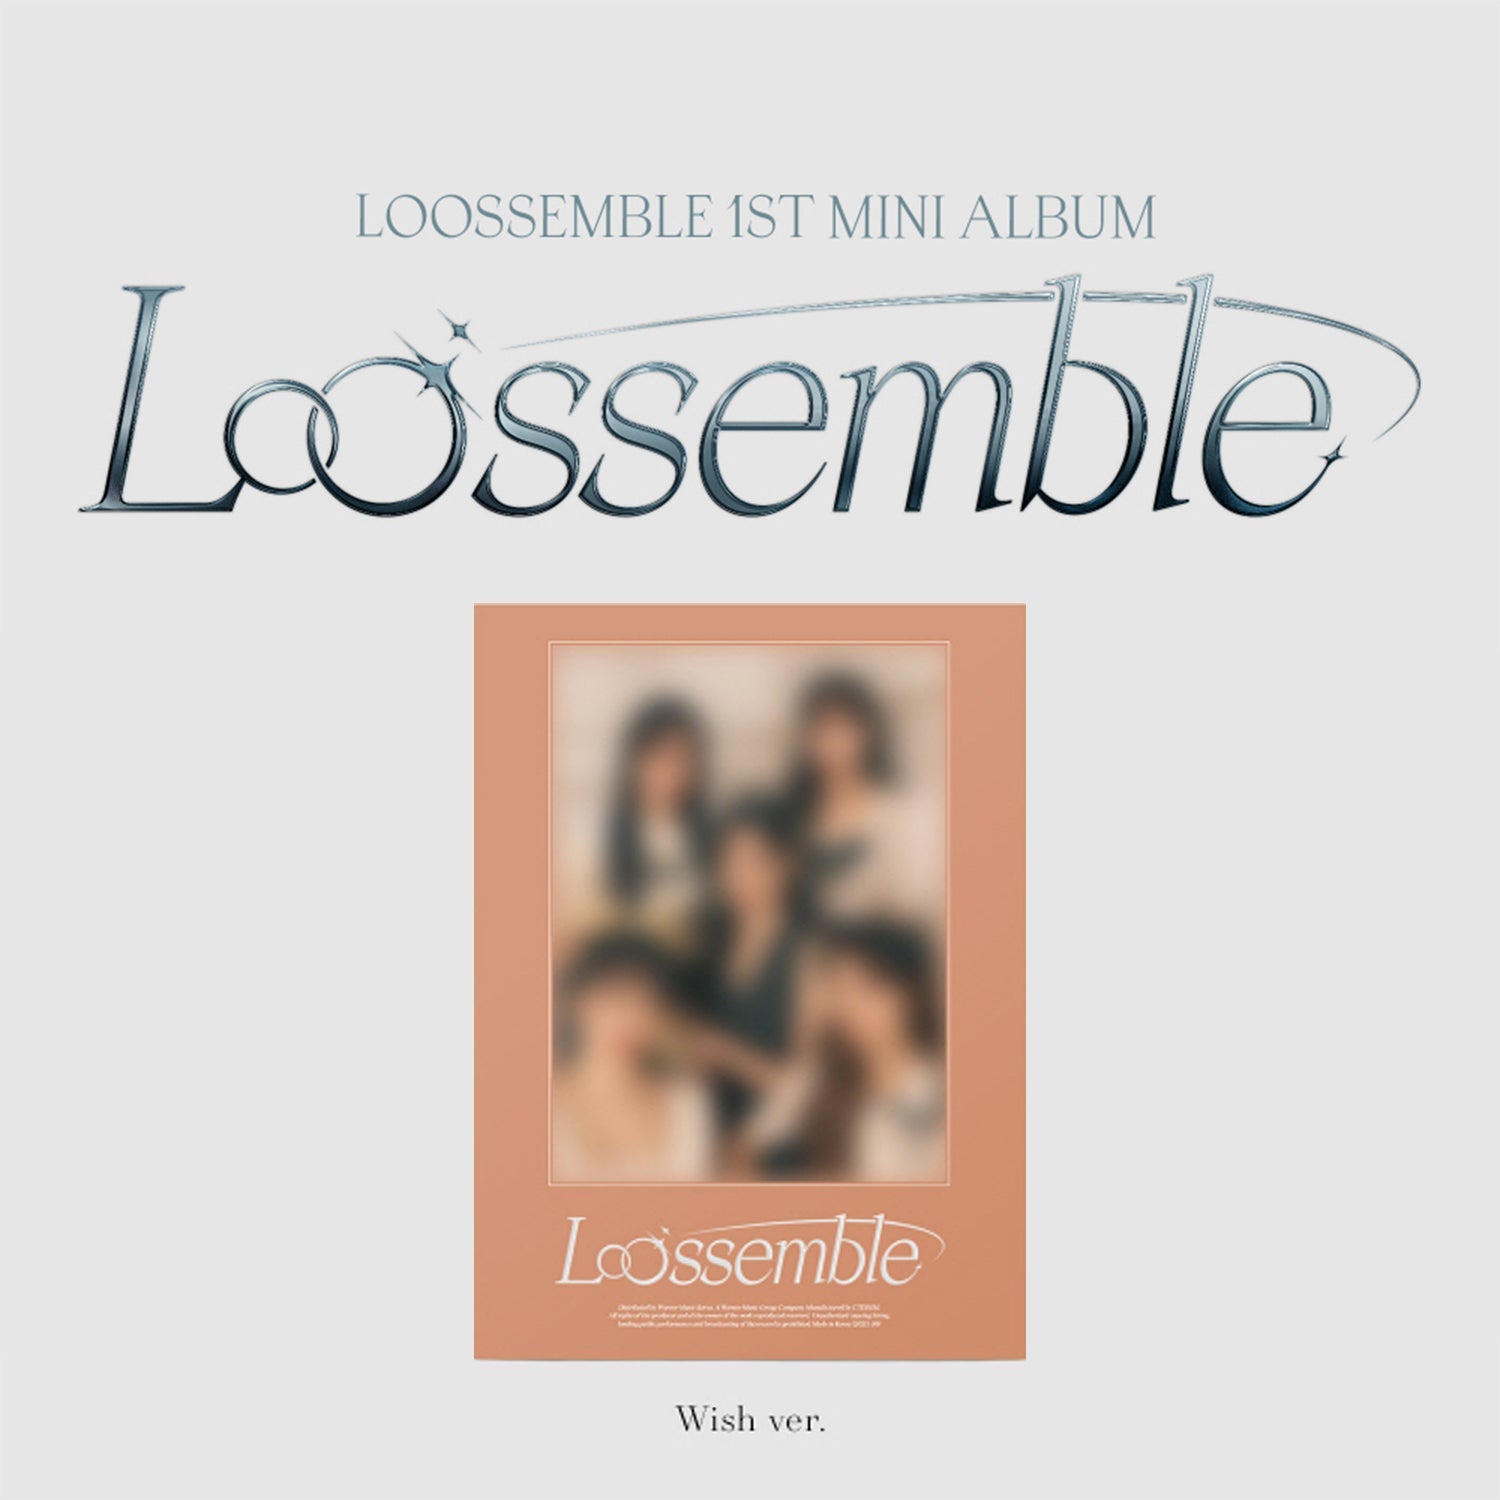 LOOSSEMBLE 1ST MINI ALBUM 'LOOSSEMBLE' WISH VERSION COVER